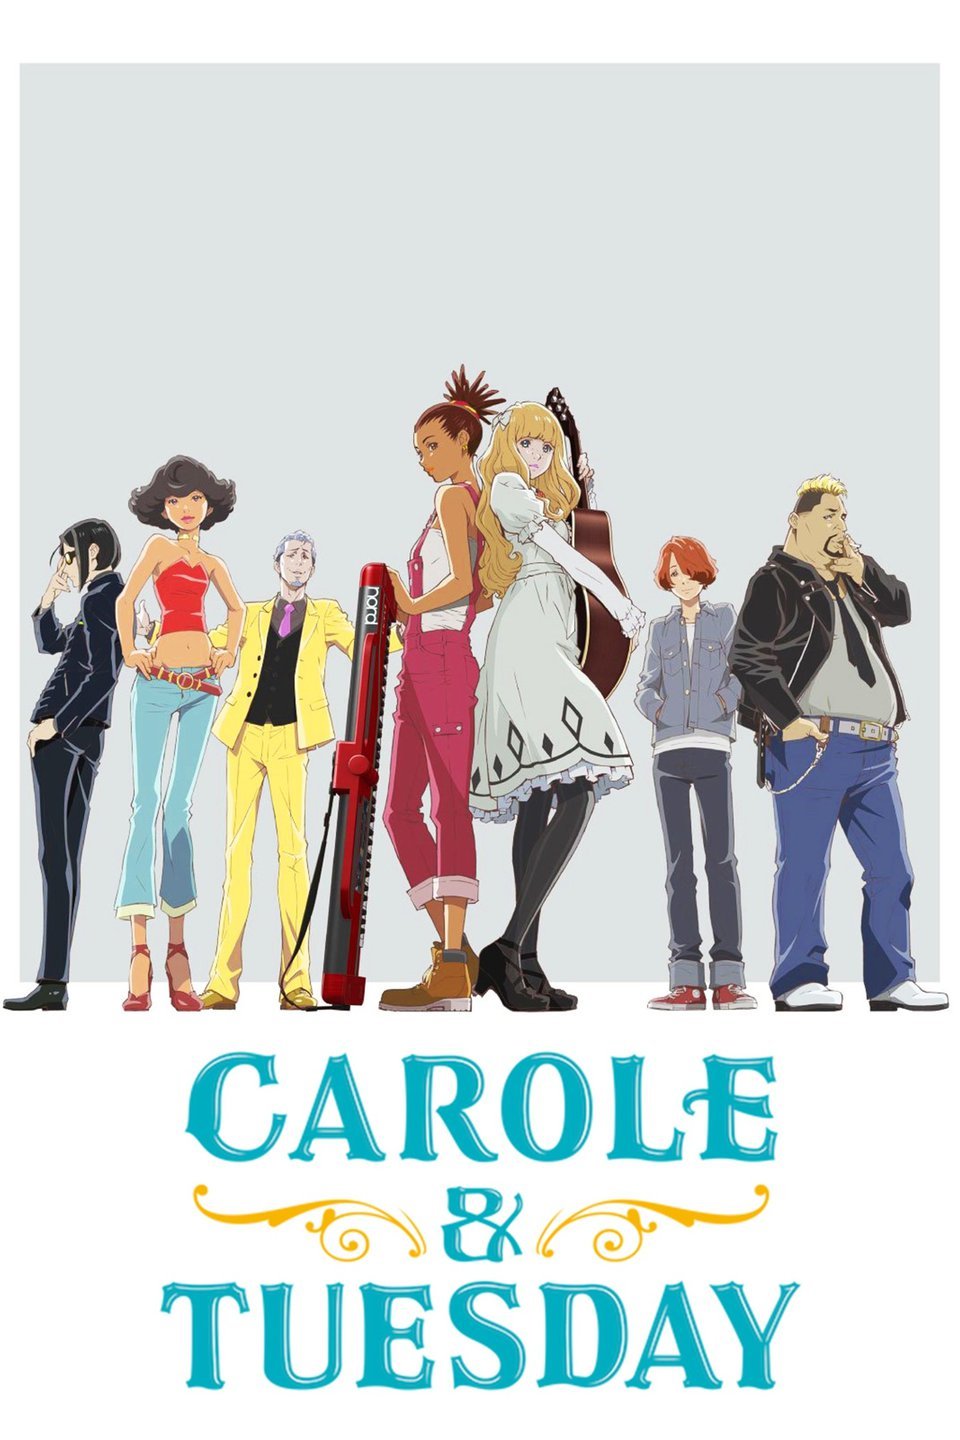 Carole  Tuesday TV Series 2019  IMDb